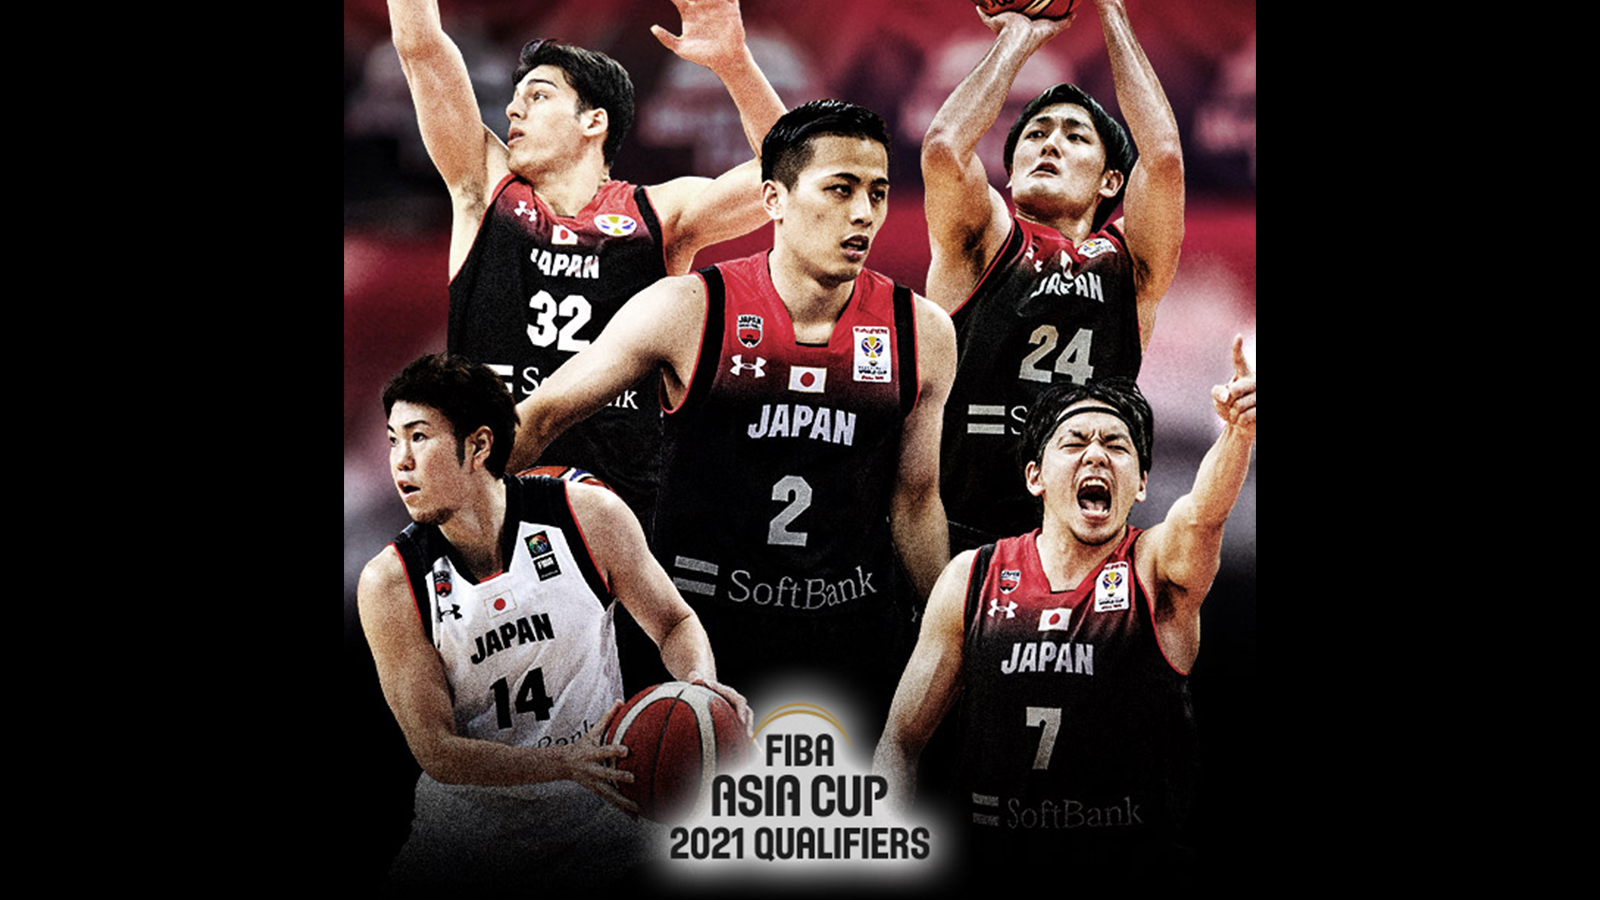 Fibaバスケットボール男子アジアカップ21予選 Bsフジ